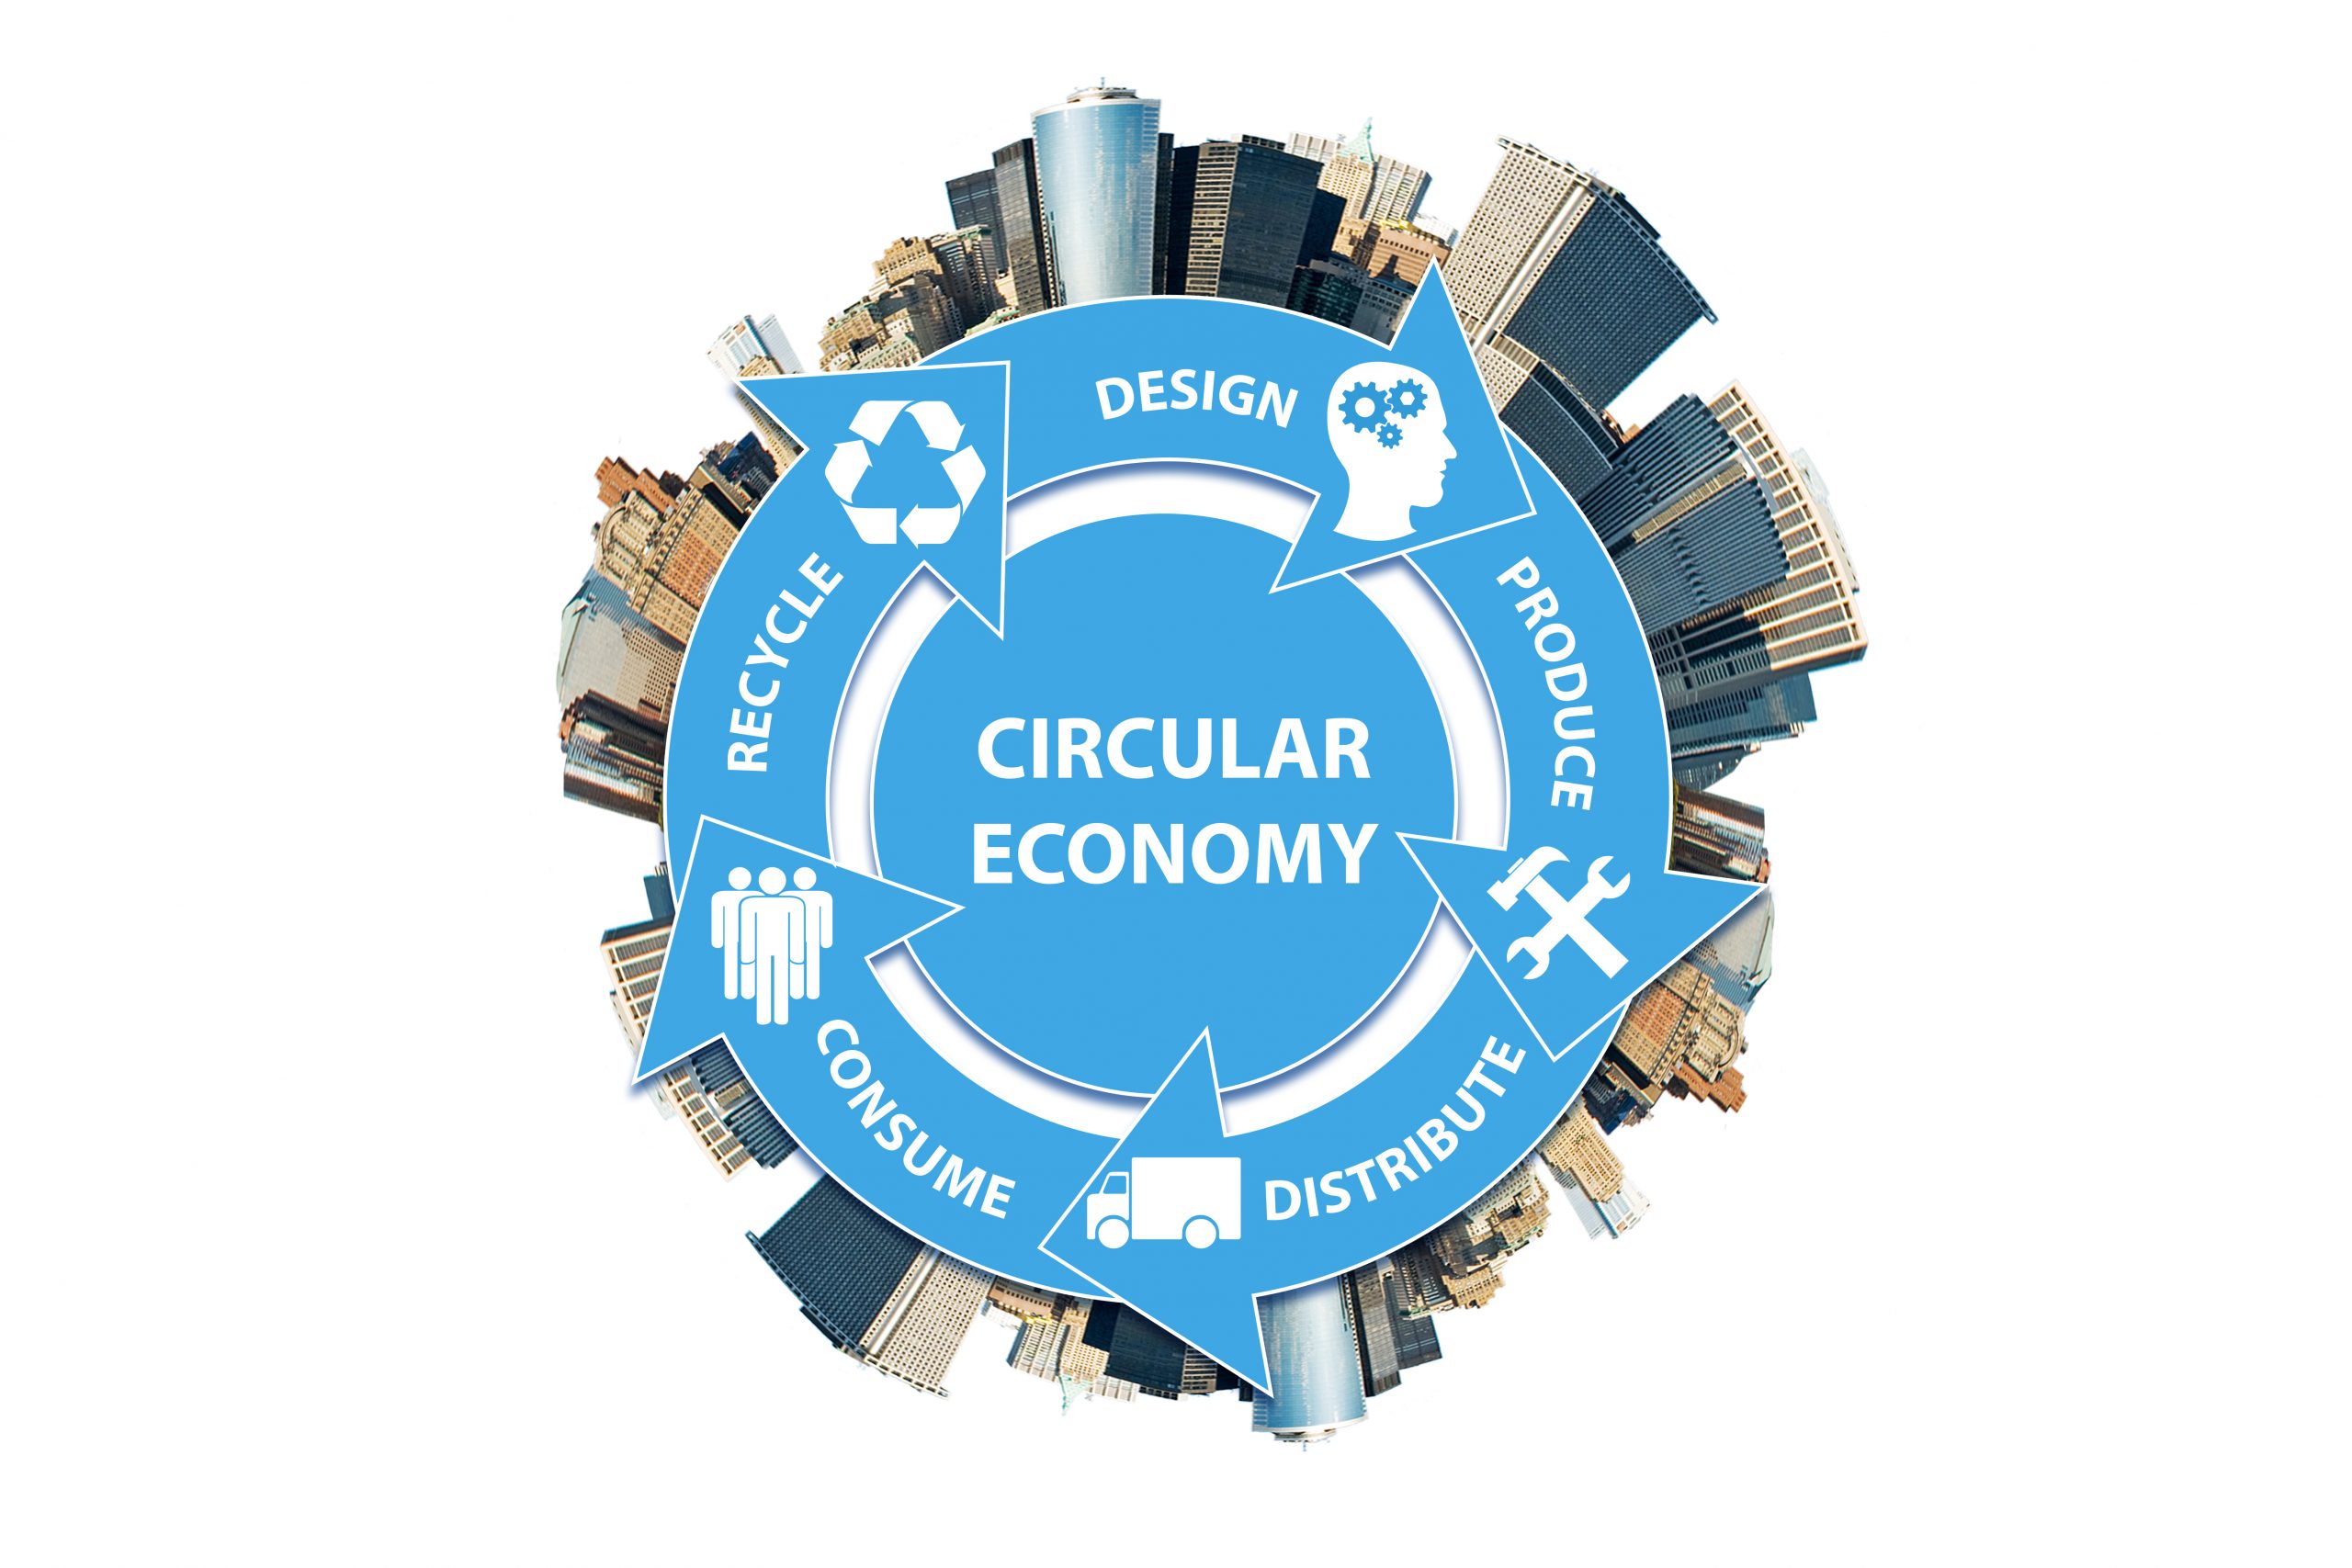 Il·lustració del concepte economia circular